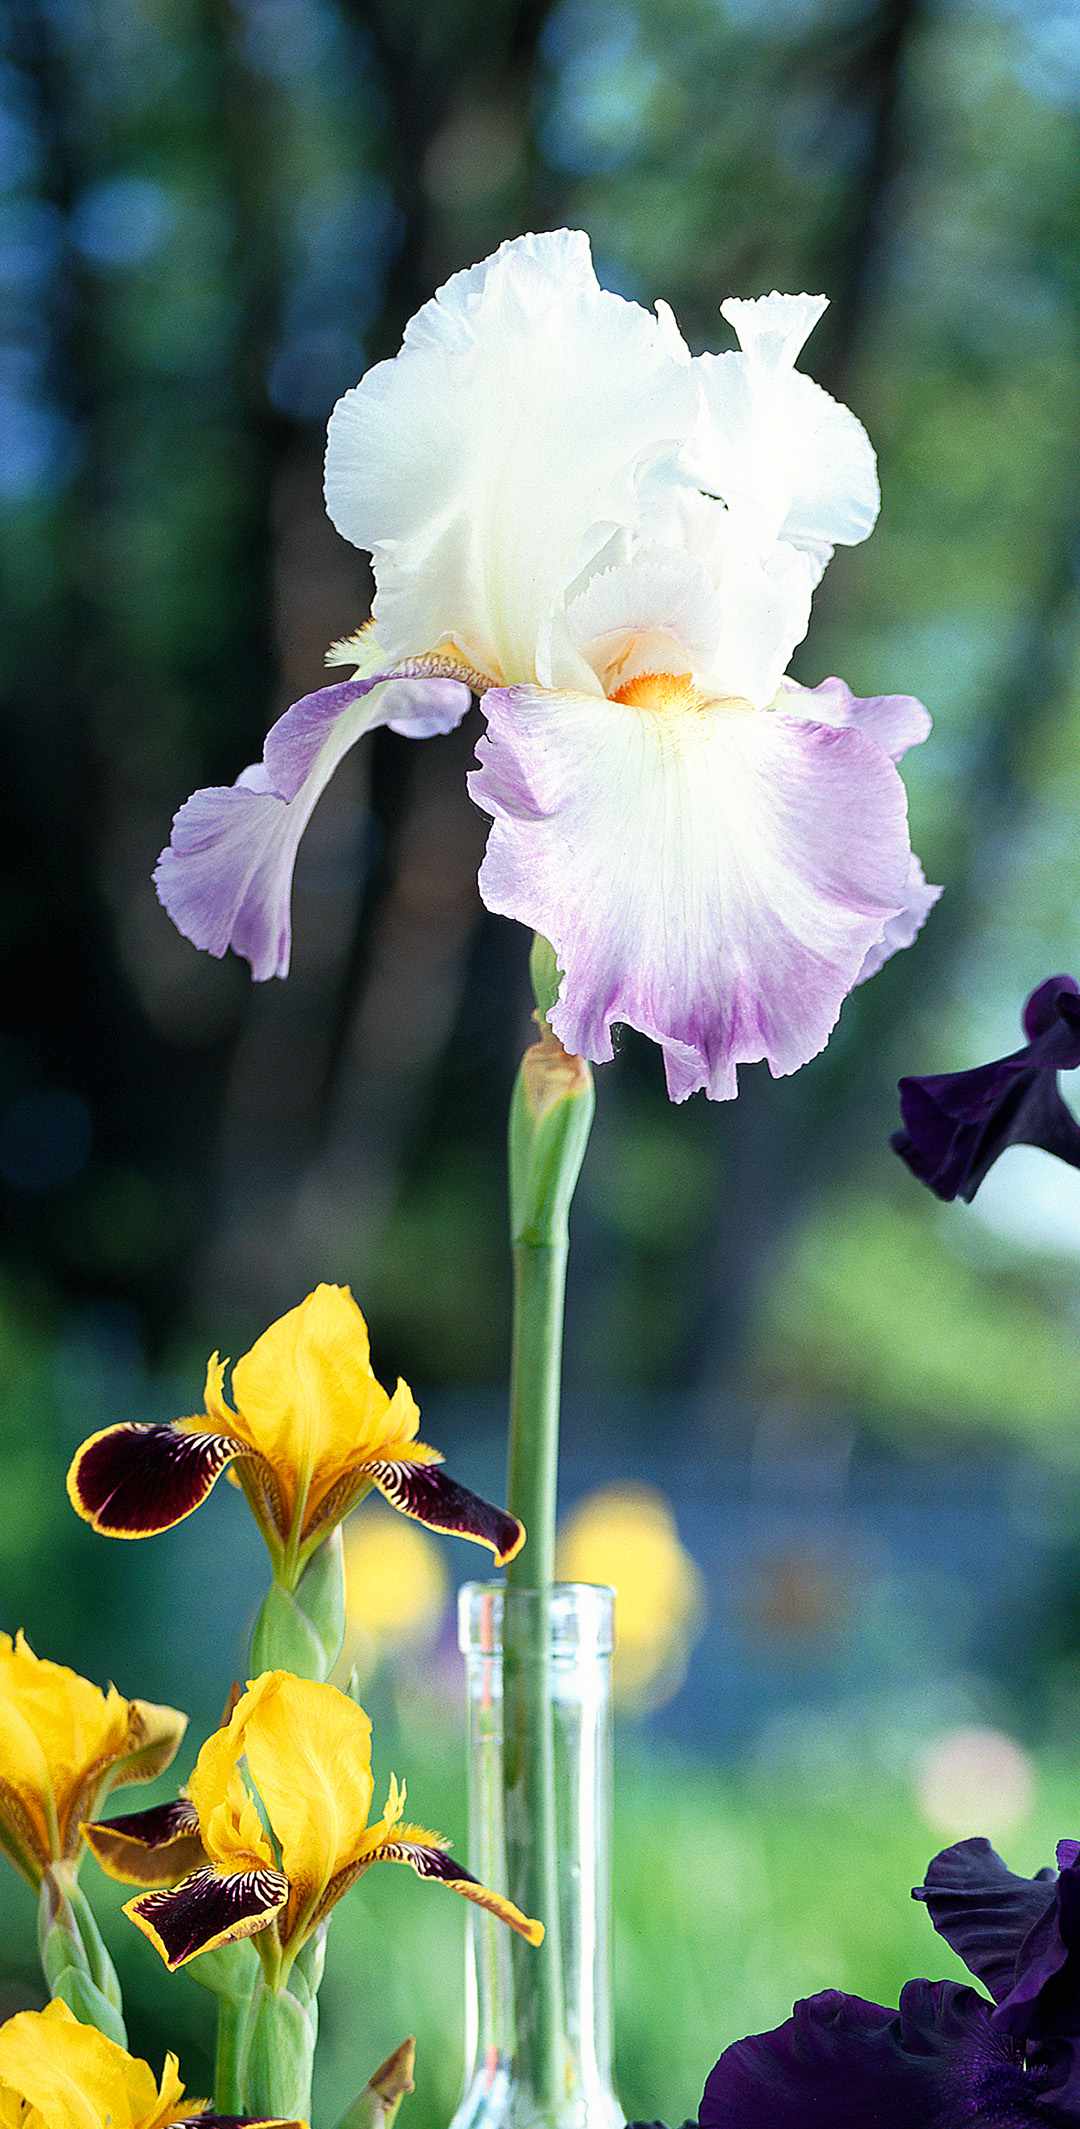 bearded iris rebecca perret flower in glass bottle